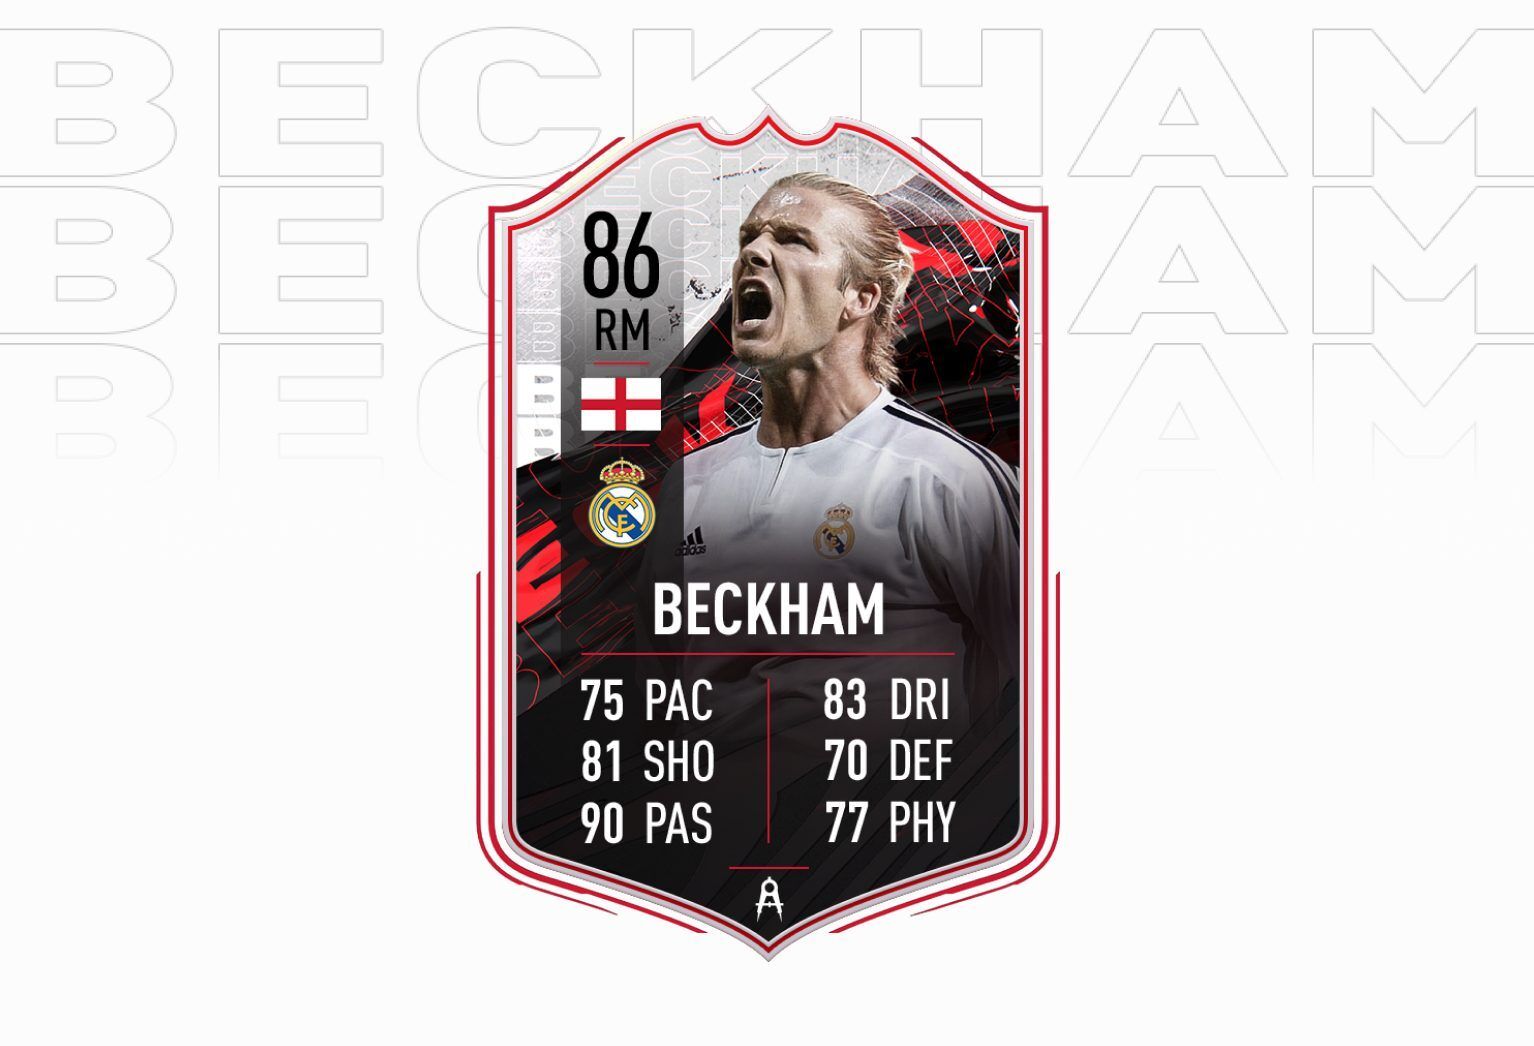 FIFA 21 David Beckham stats